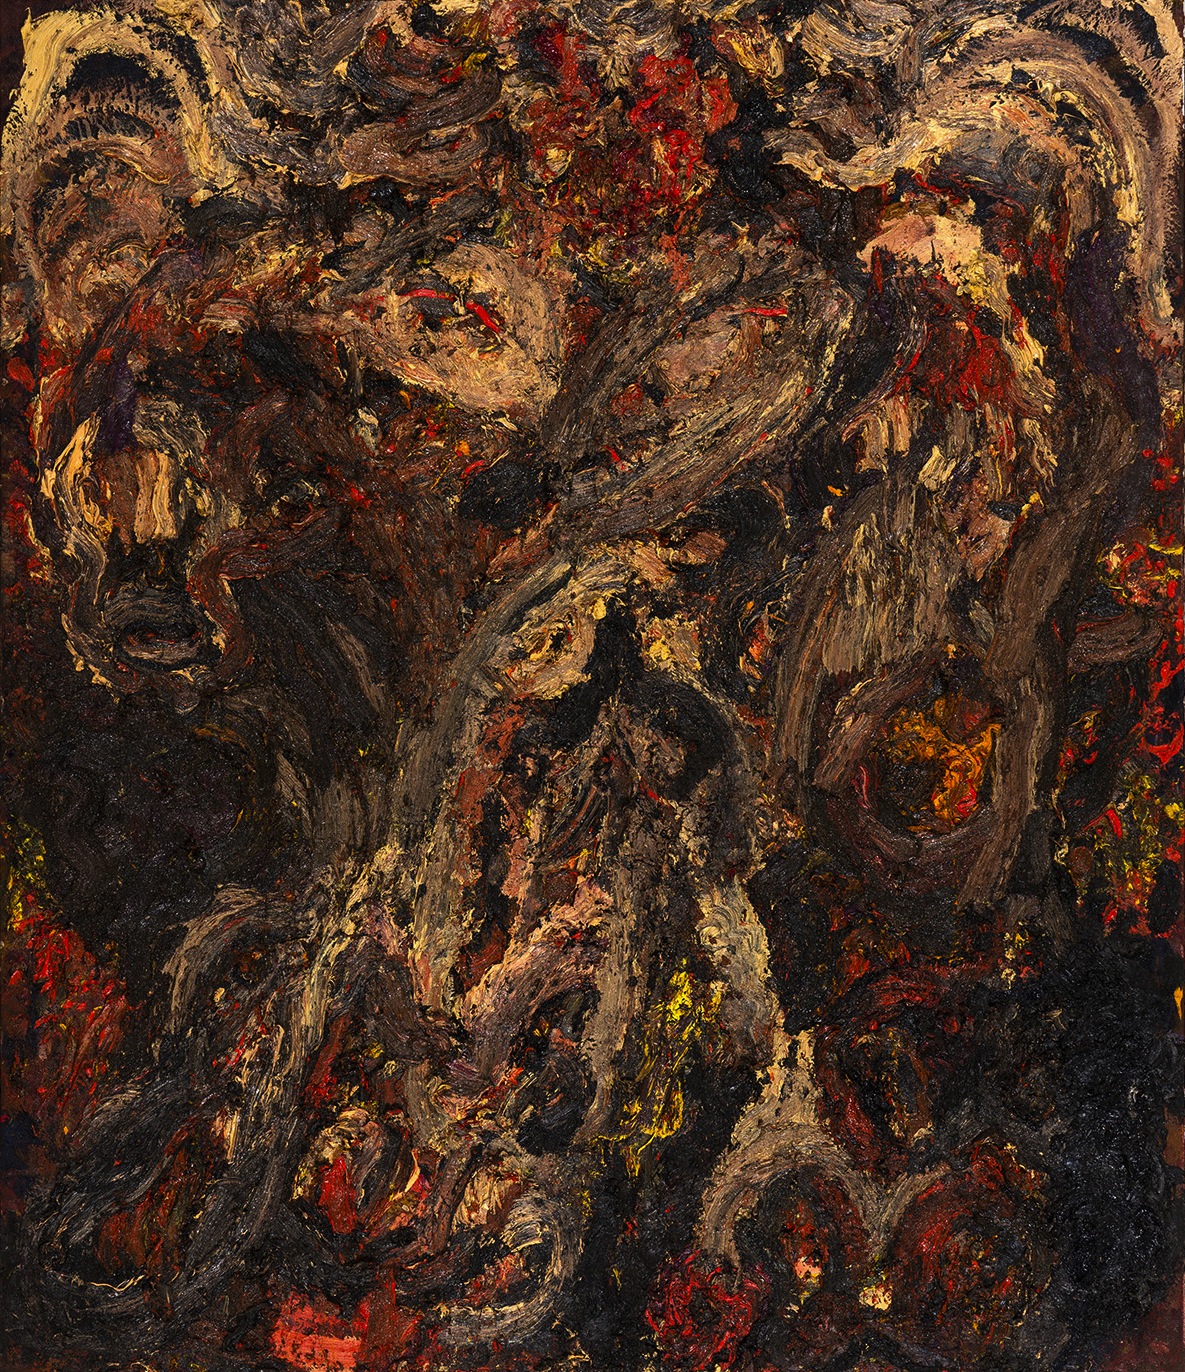  Cyberdemon, 2016 Oil on canvas 245 x 210 cm 